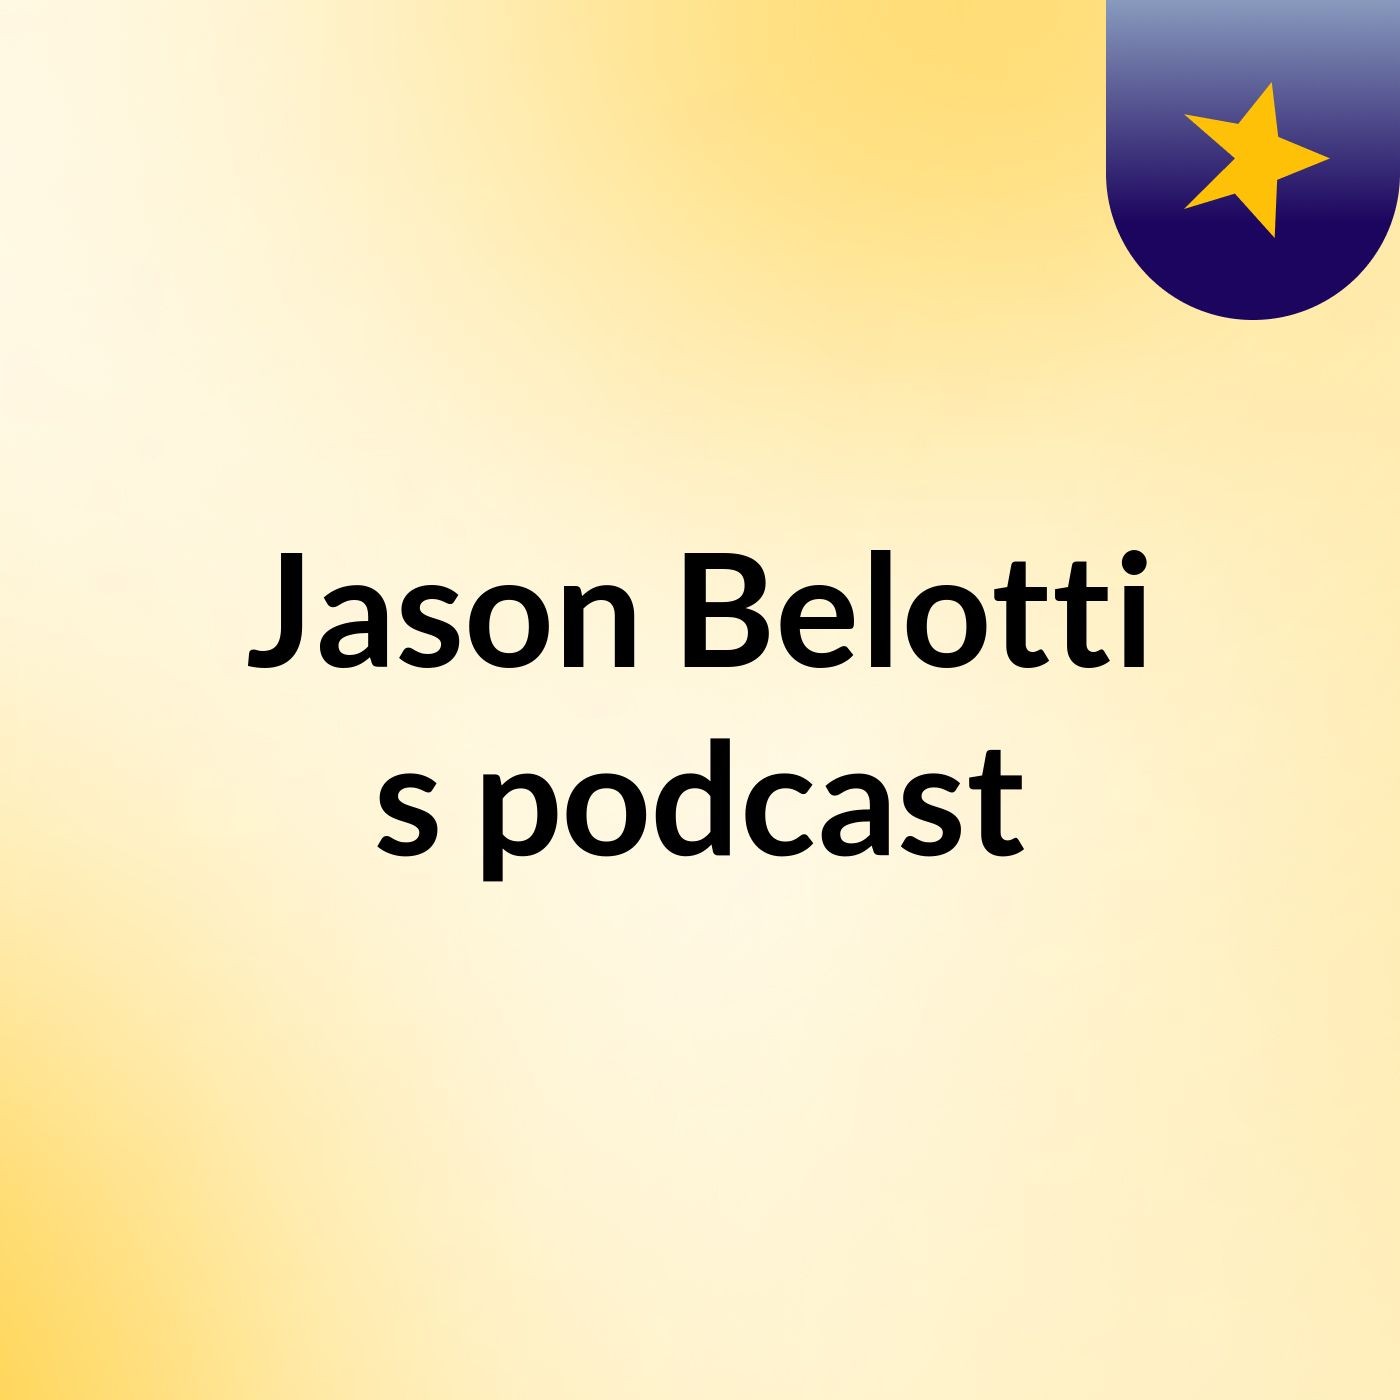 Jason Belotti's podcast